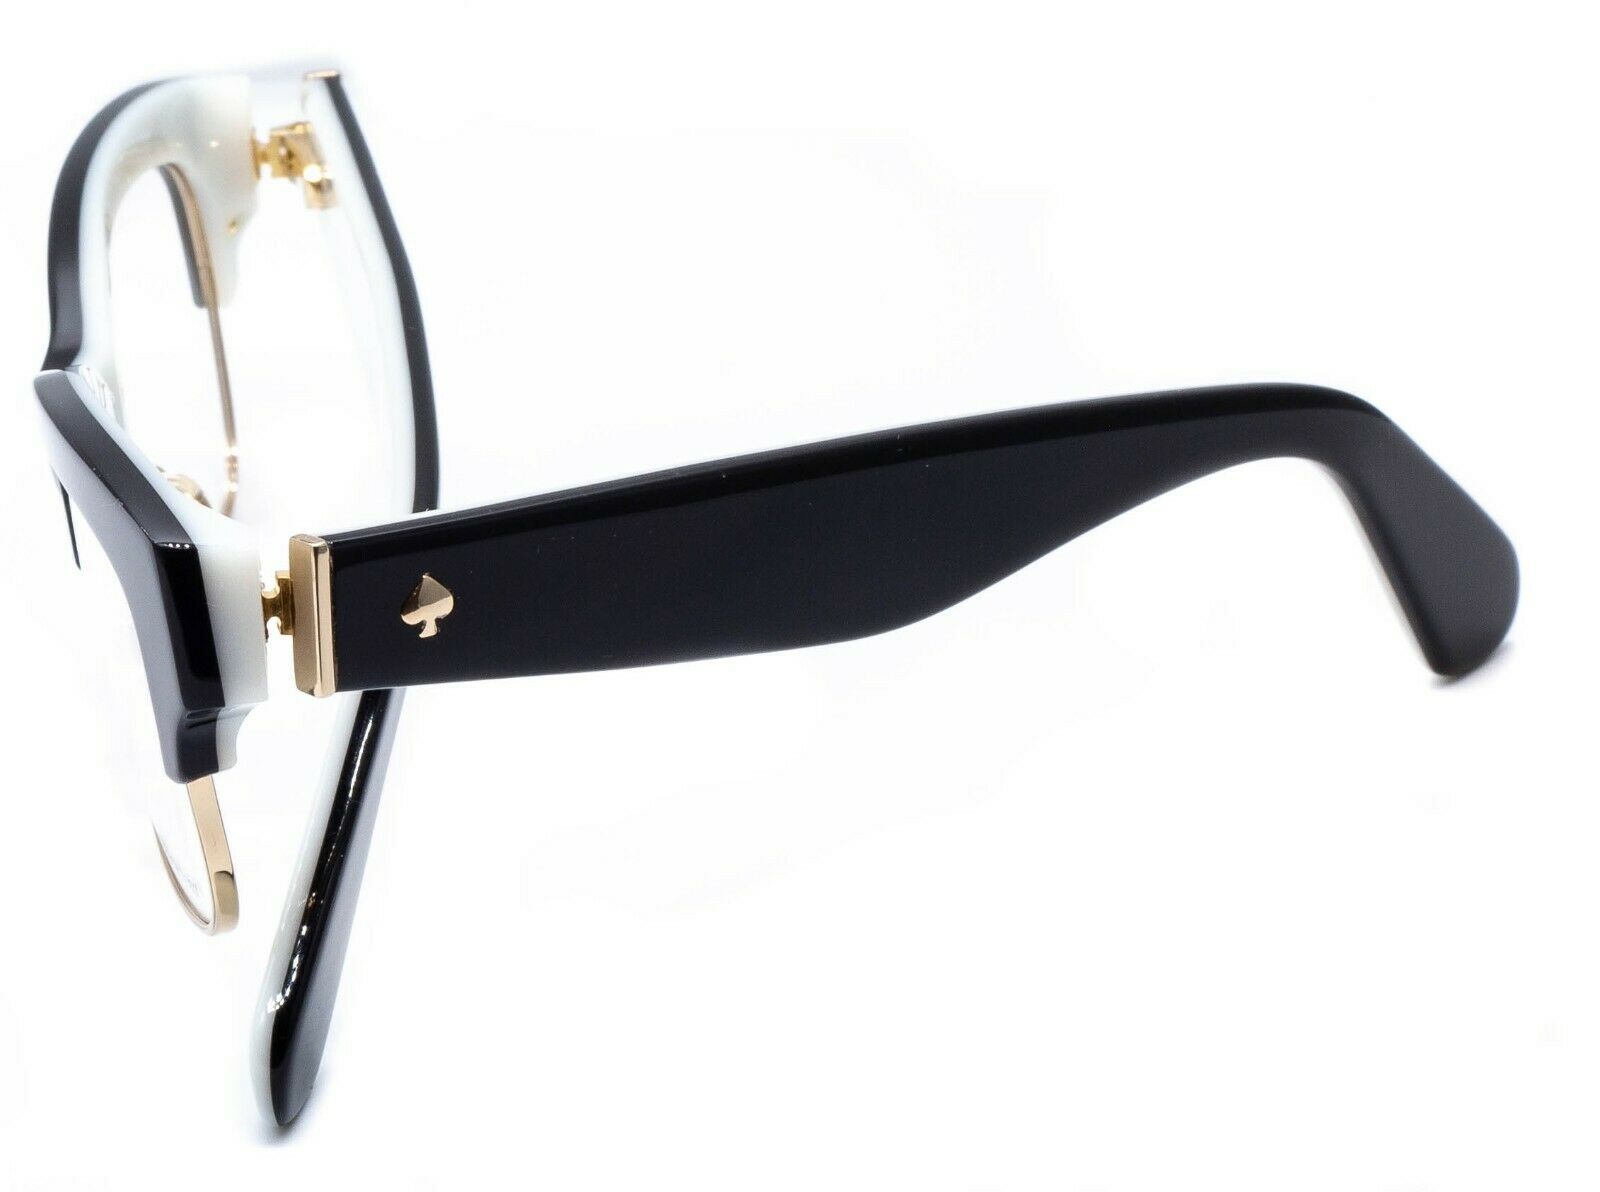 KATE SPADE NEW YORK SHANTAL 0QOP 50mm Eyewear FRAMES Glasses RX Optical - New